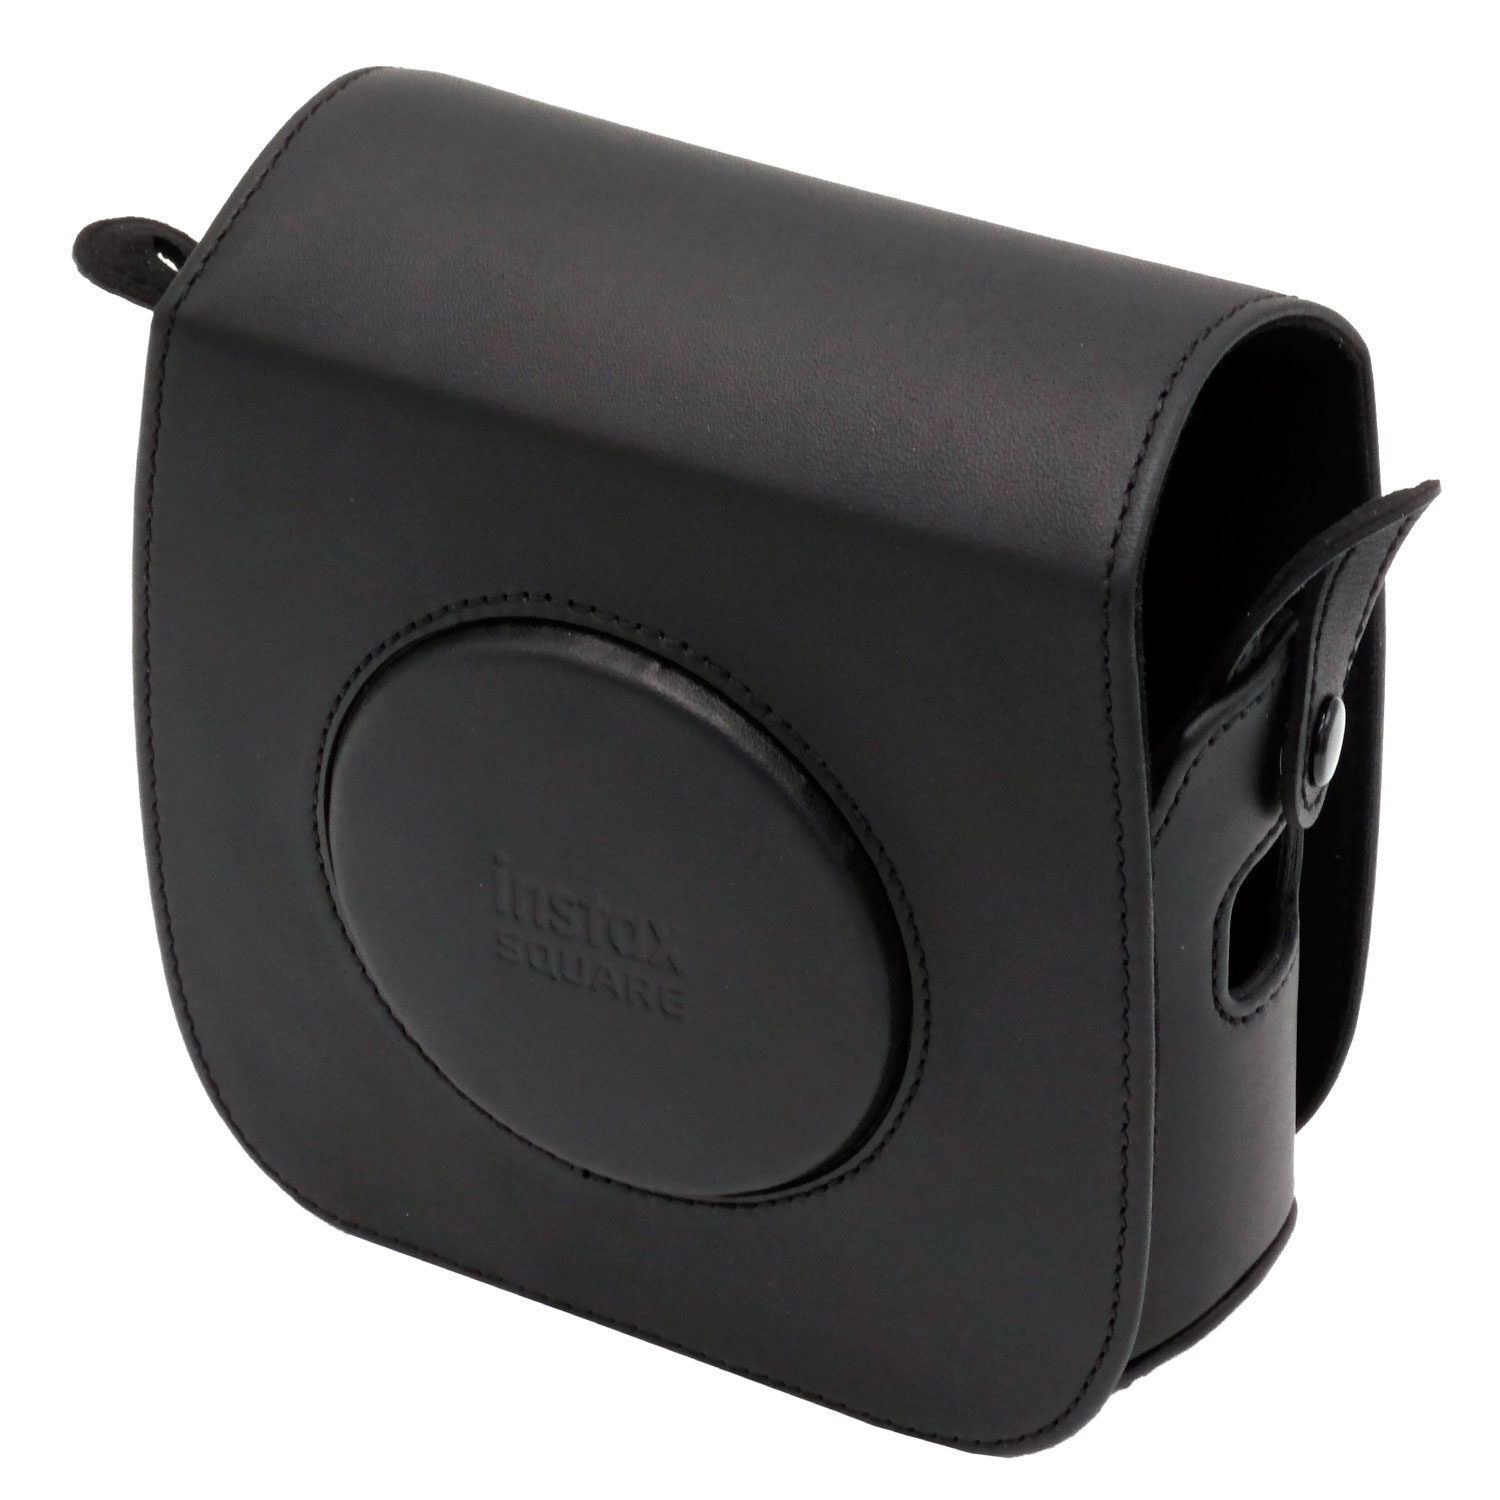 Fujifilm Instax Sq10 Camera Case